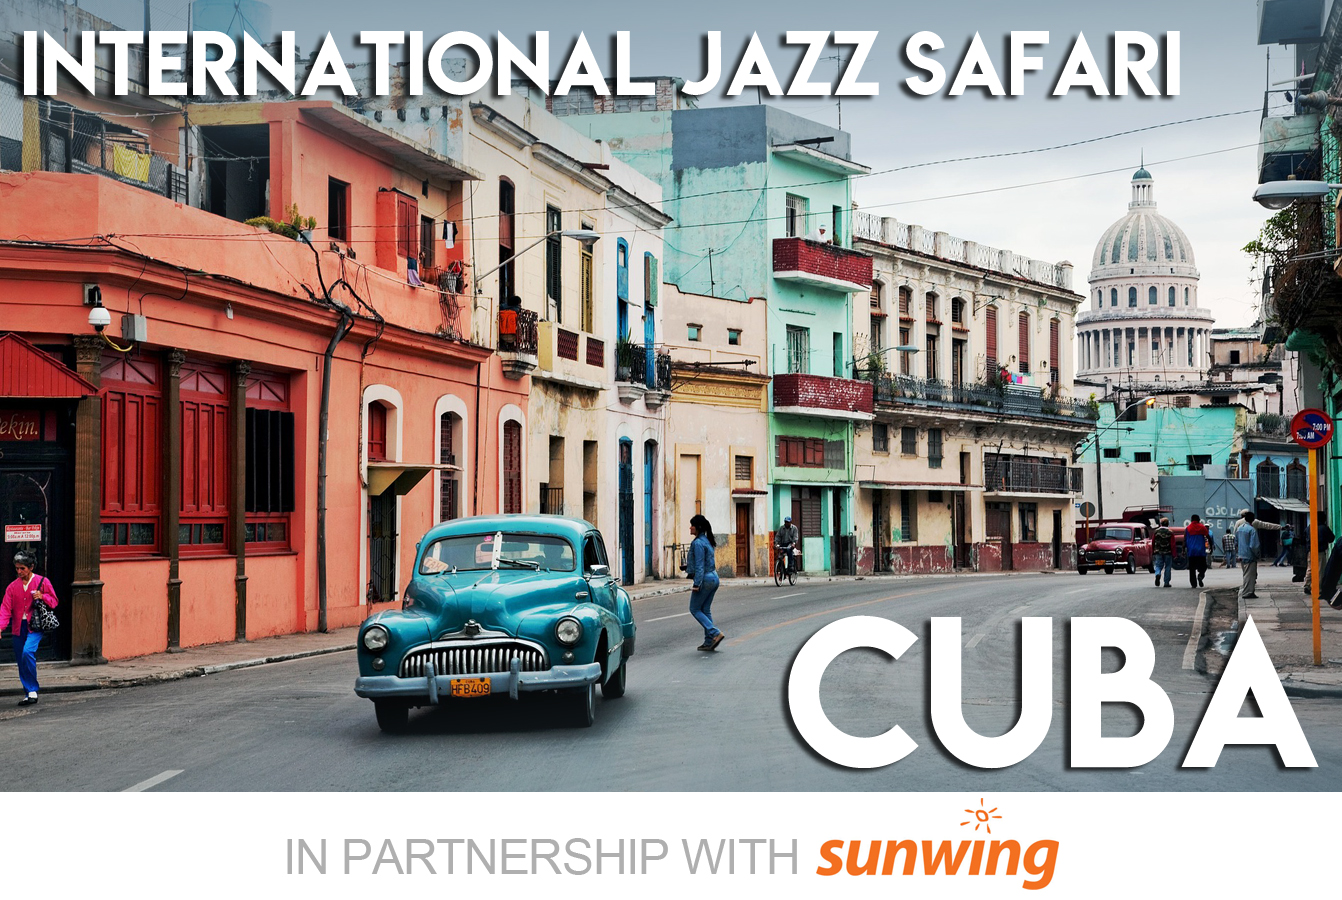 JAZZ.FM91 & Sunwing International Jazz Safari to Havana